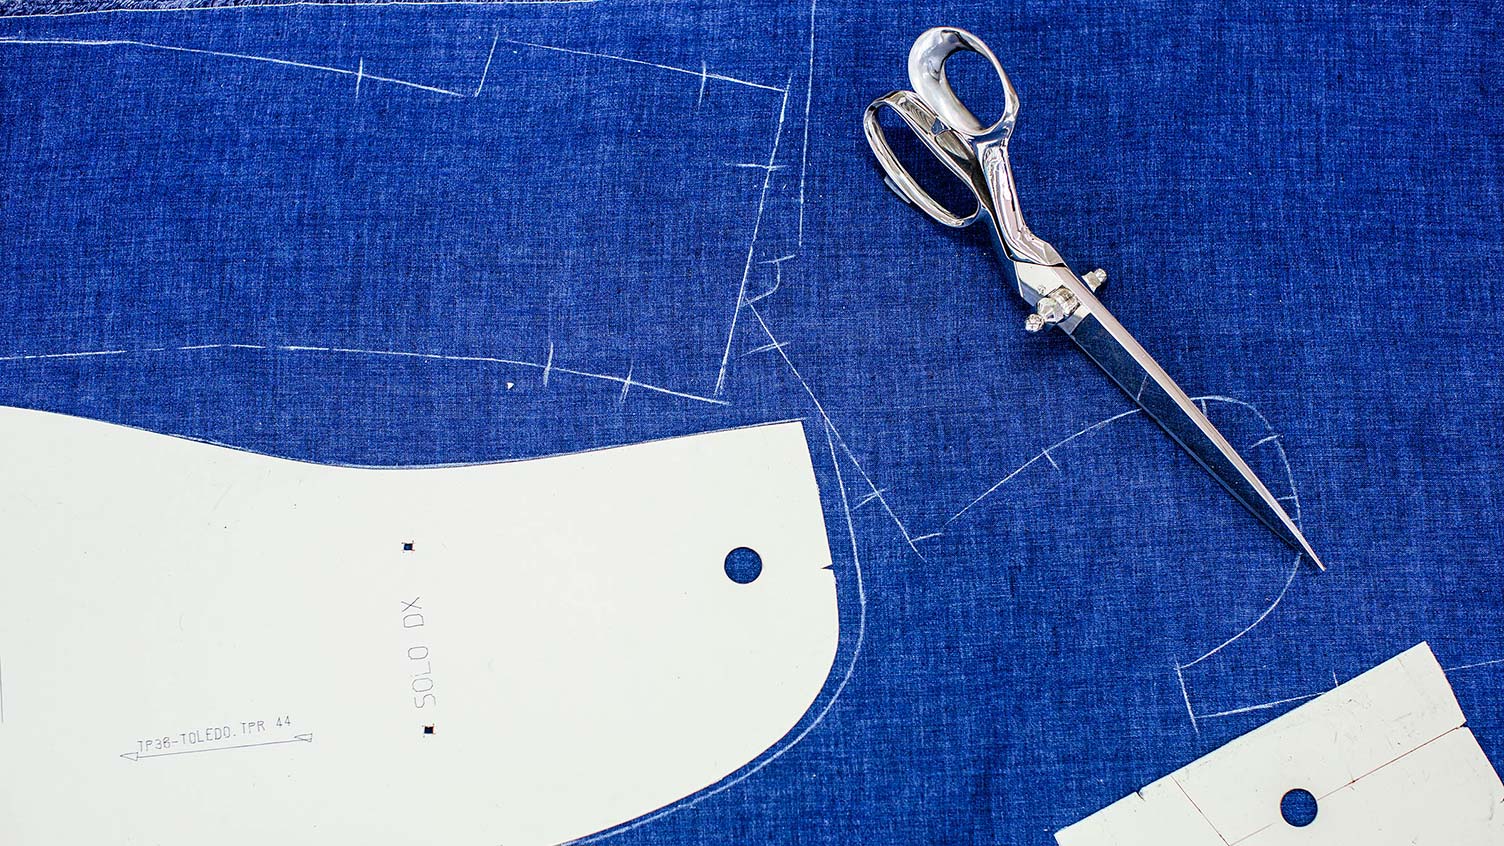 Image of scissors on fabric